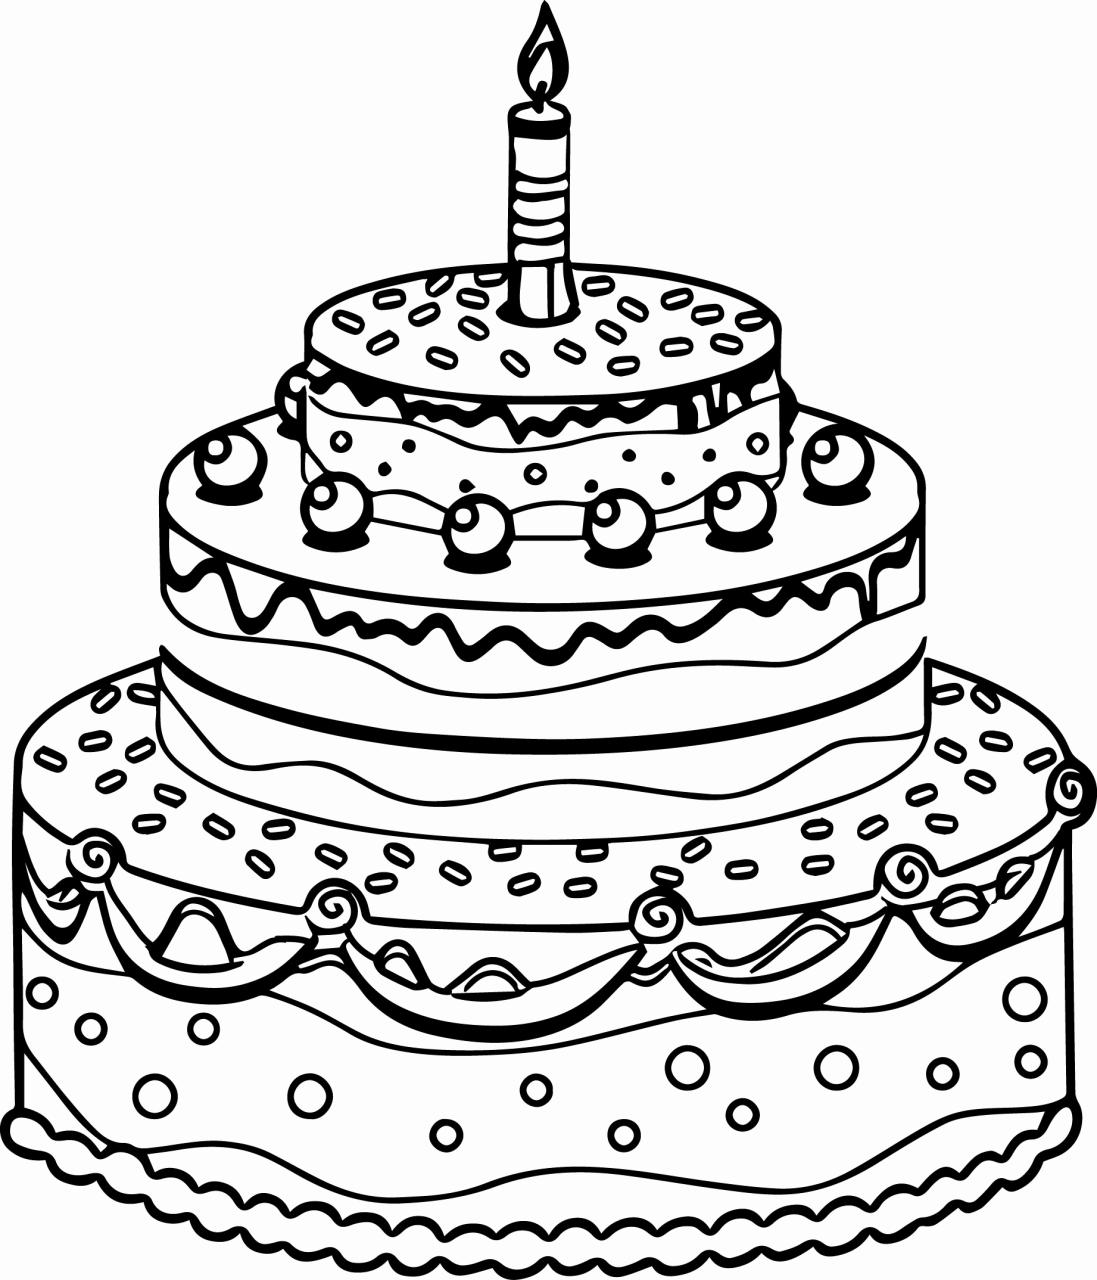 Birthday Cake Coloring Page at Free printable